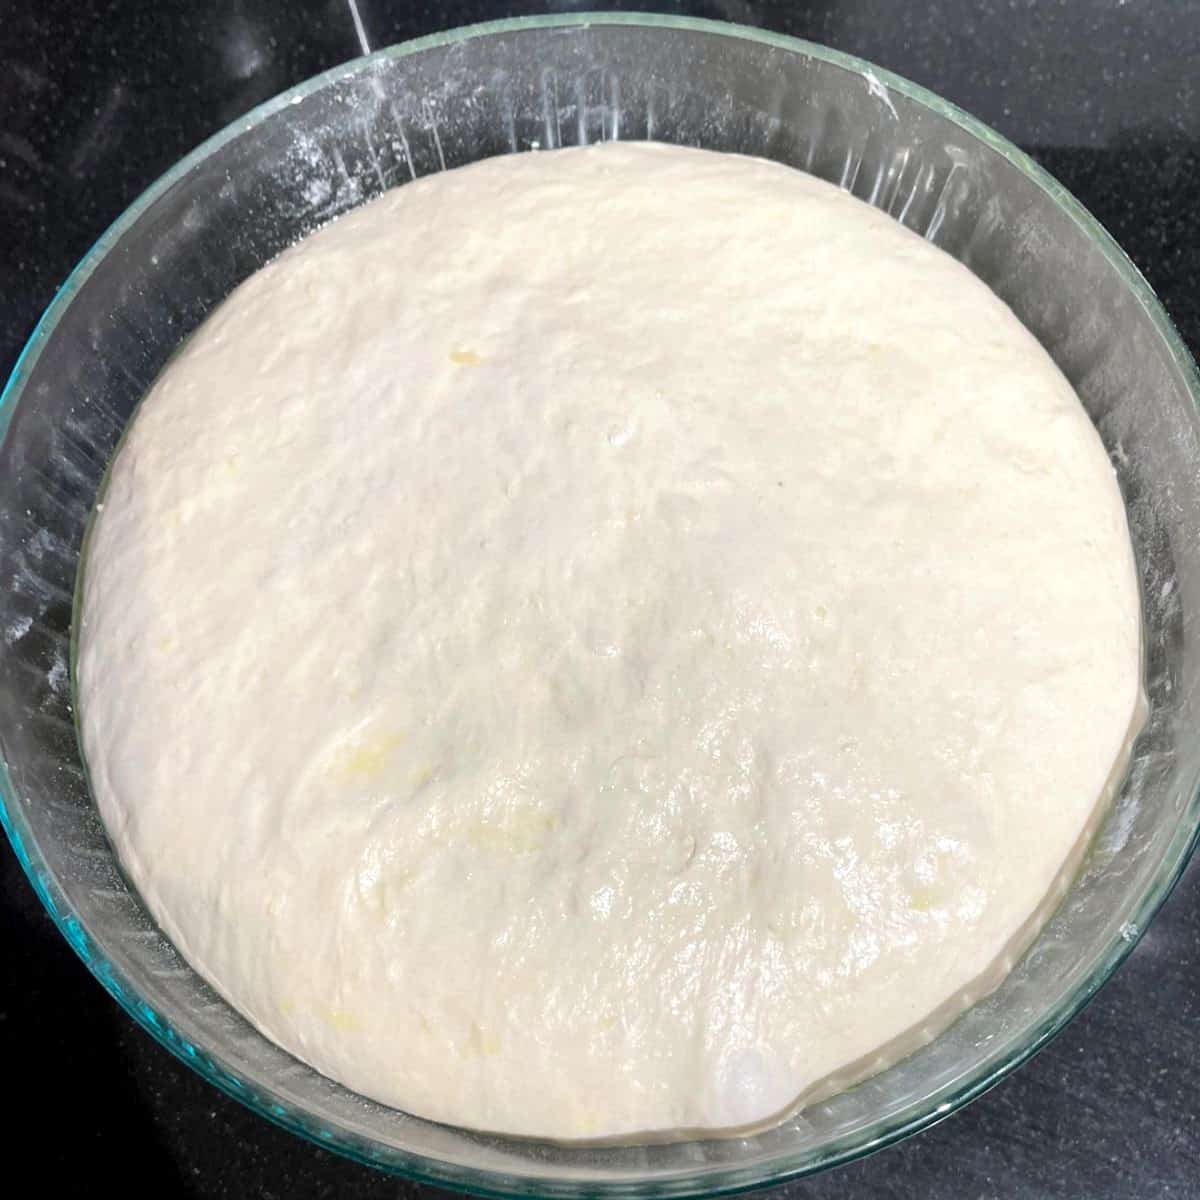 Risen Italian bread dough in bowl.